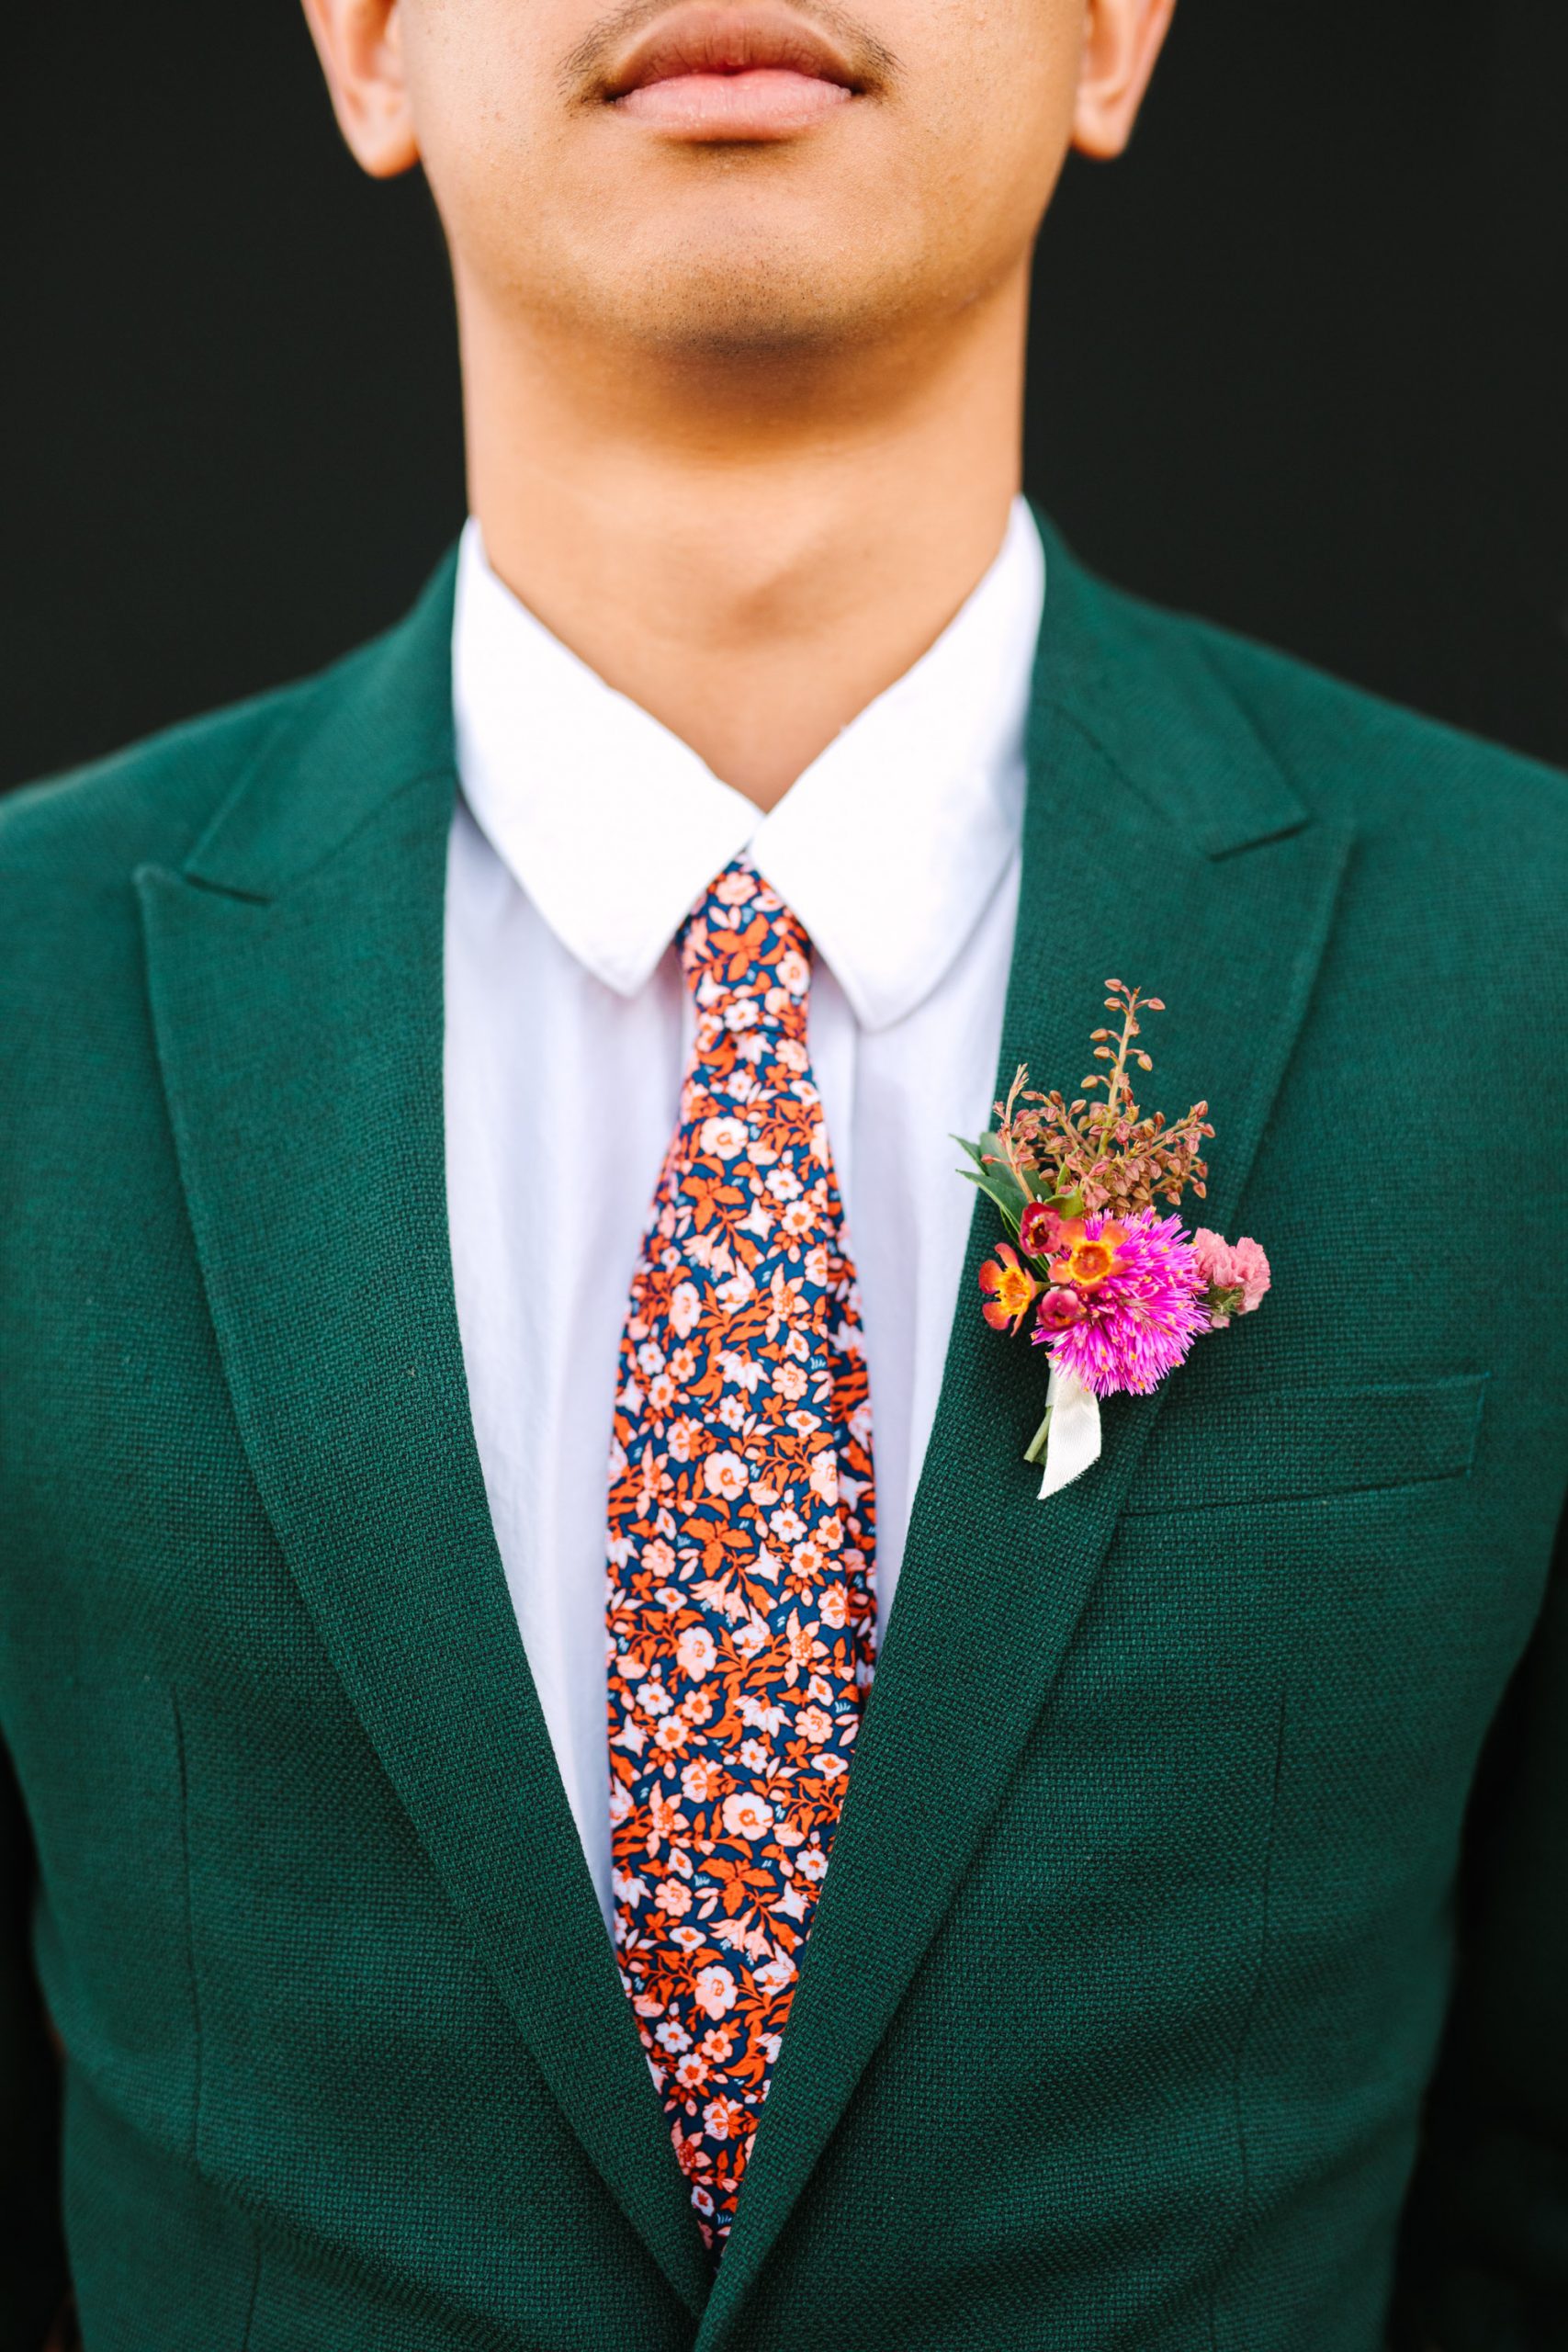 Groomsman emerald suit with floral tie - www.marycostaweddings.com